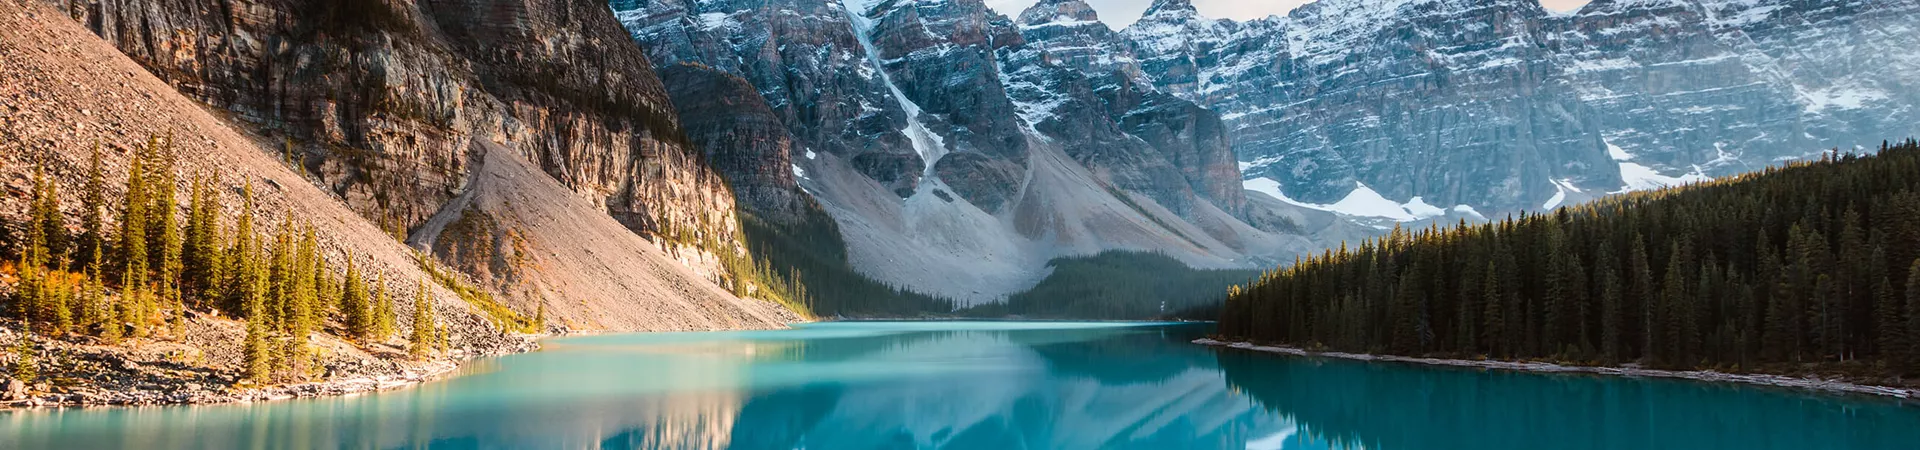 Mountain tops and lake in Alberta, Canada